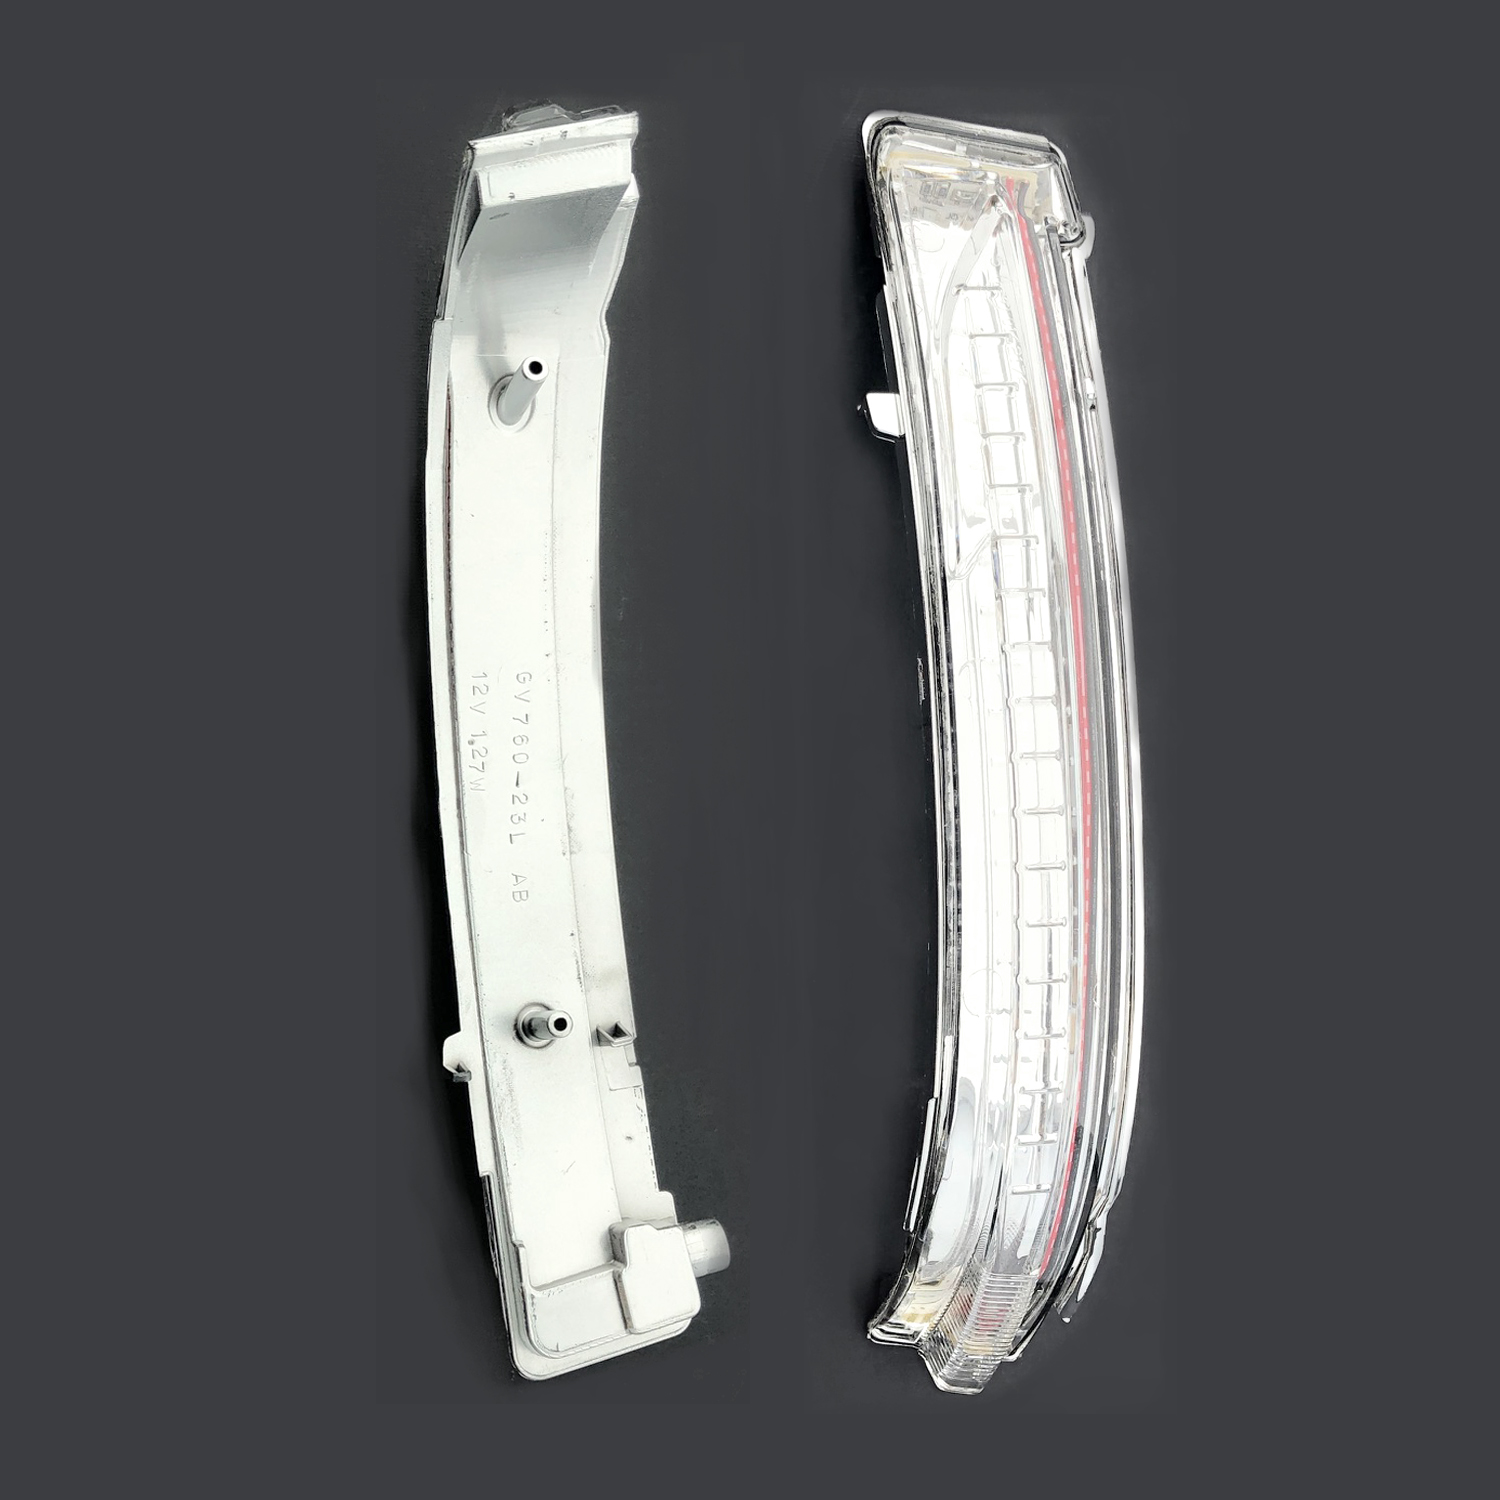 Nissan Qashqai Wing Mirror Indicator LEFT HAND ( UK Passenger Side ) 2014 to 2020 – Wing Mirror Indicator ( Fits for J11 Model )